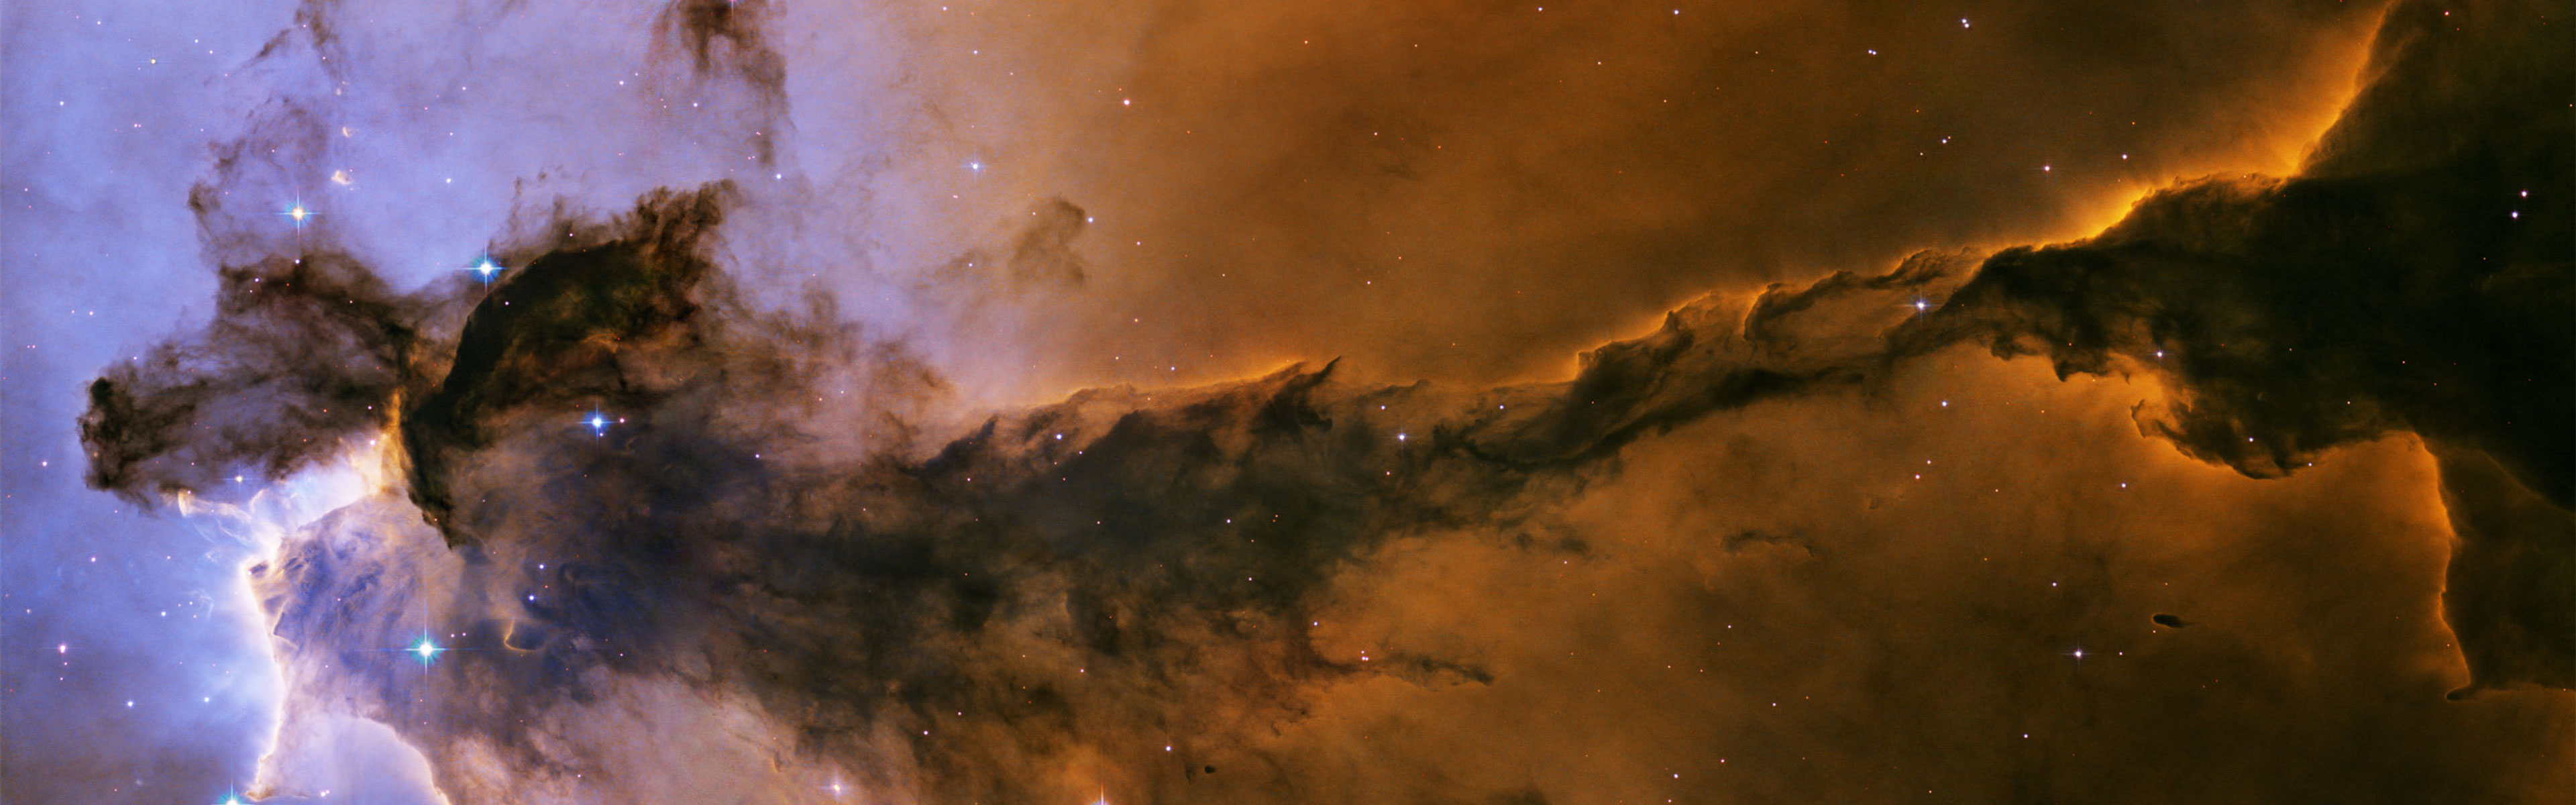 Nebulae Horsehead Nebula Wallpaper